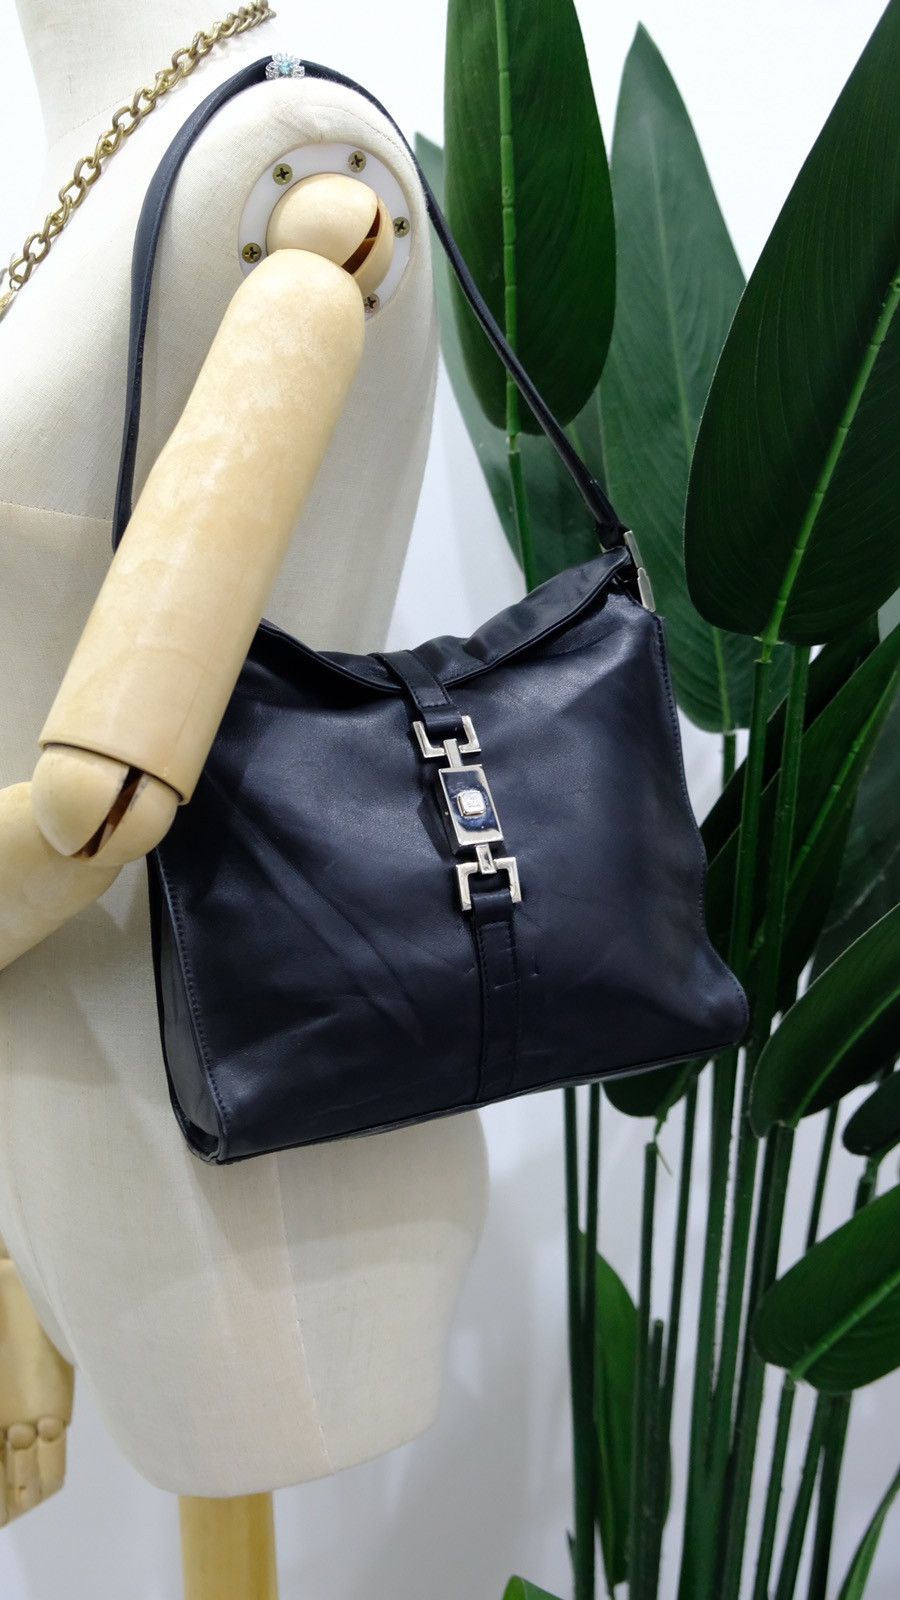 Authentic Gucci Black Jackie Leather Shoulder Bag - 1